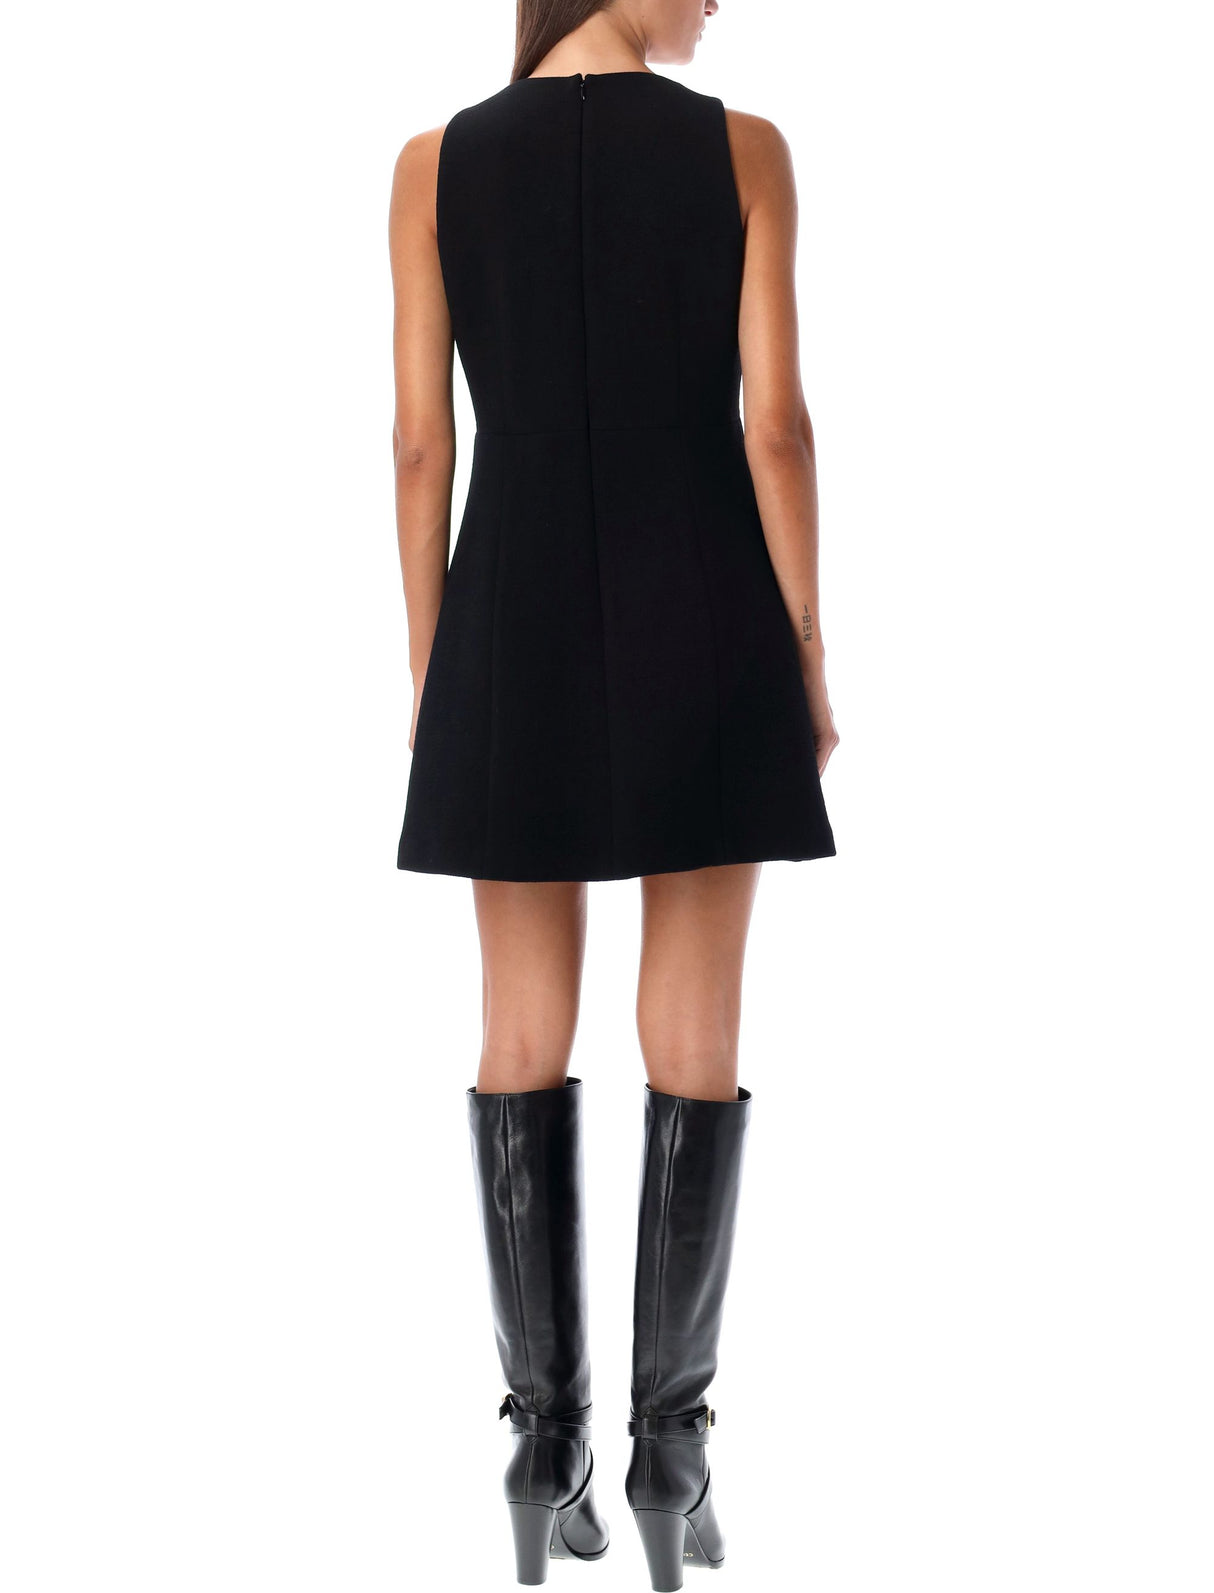 ETRO Stunning Black Mini Dress for Fall/Winter 2023 Season